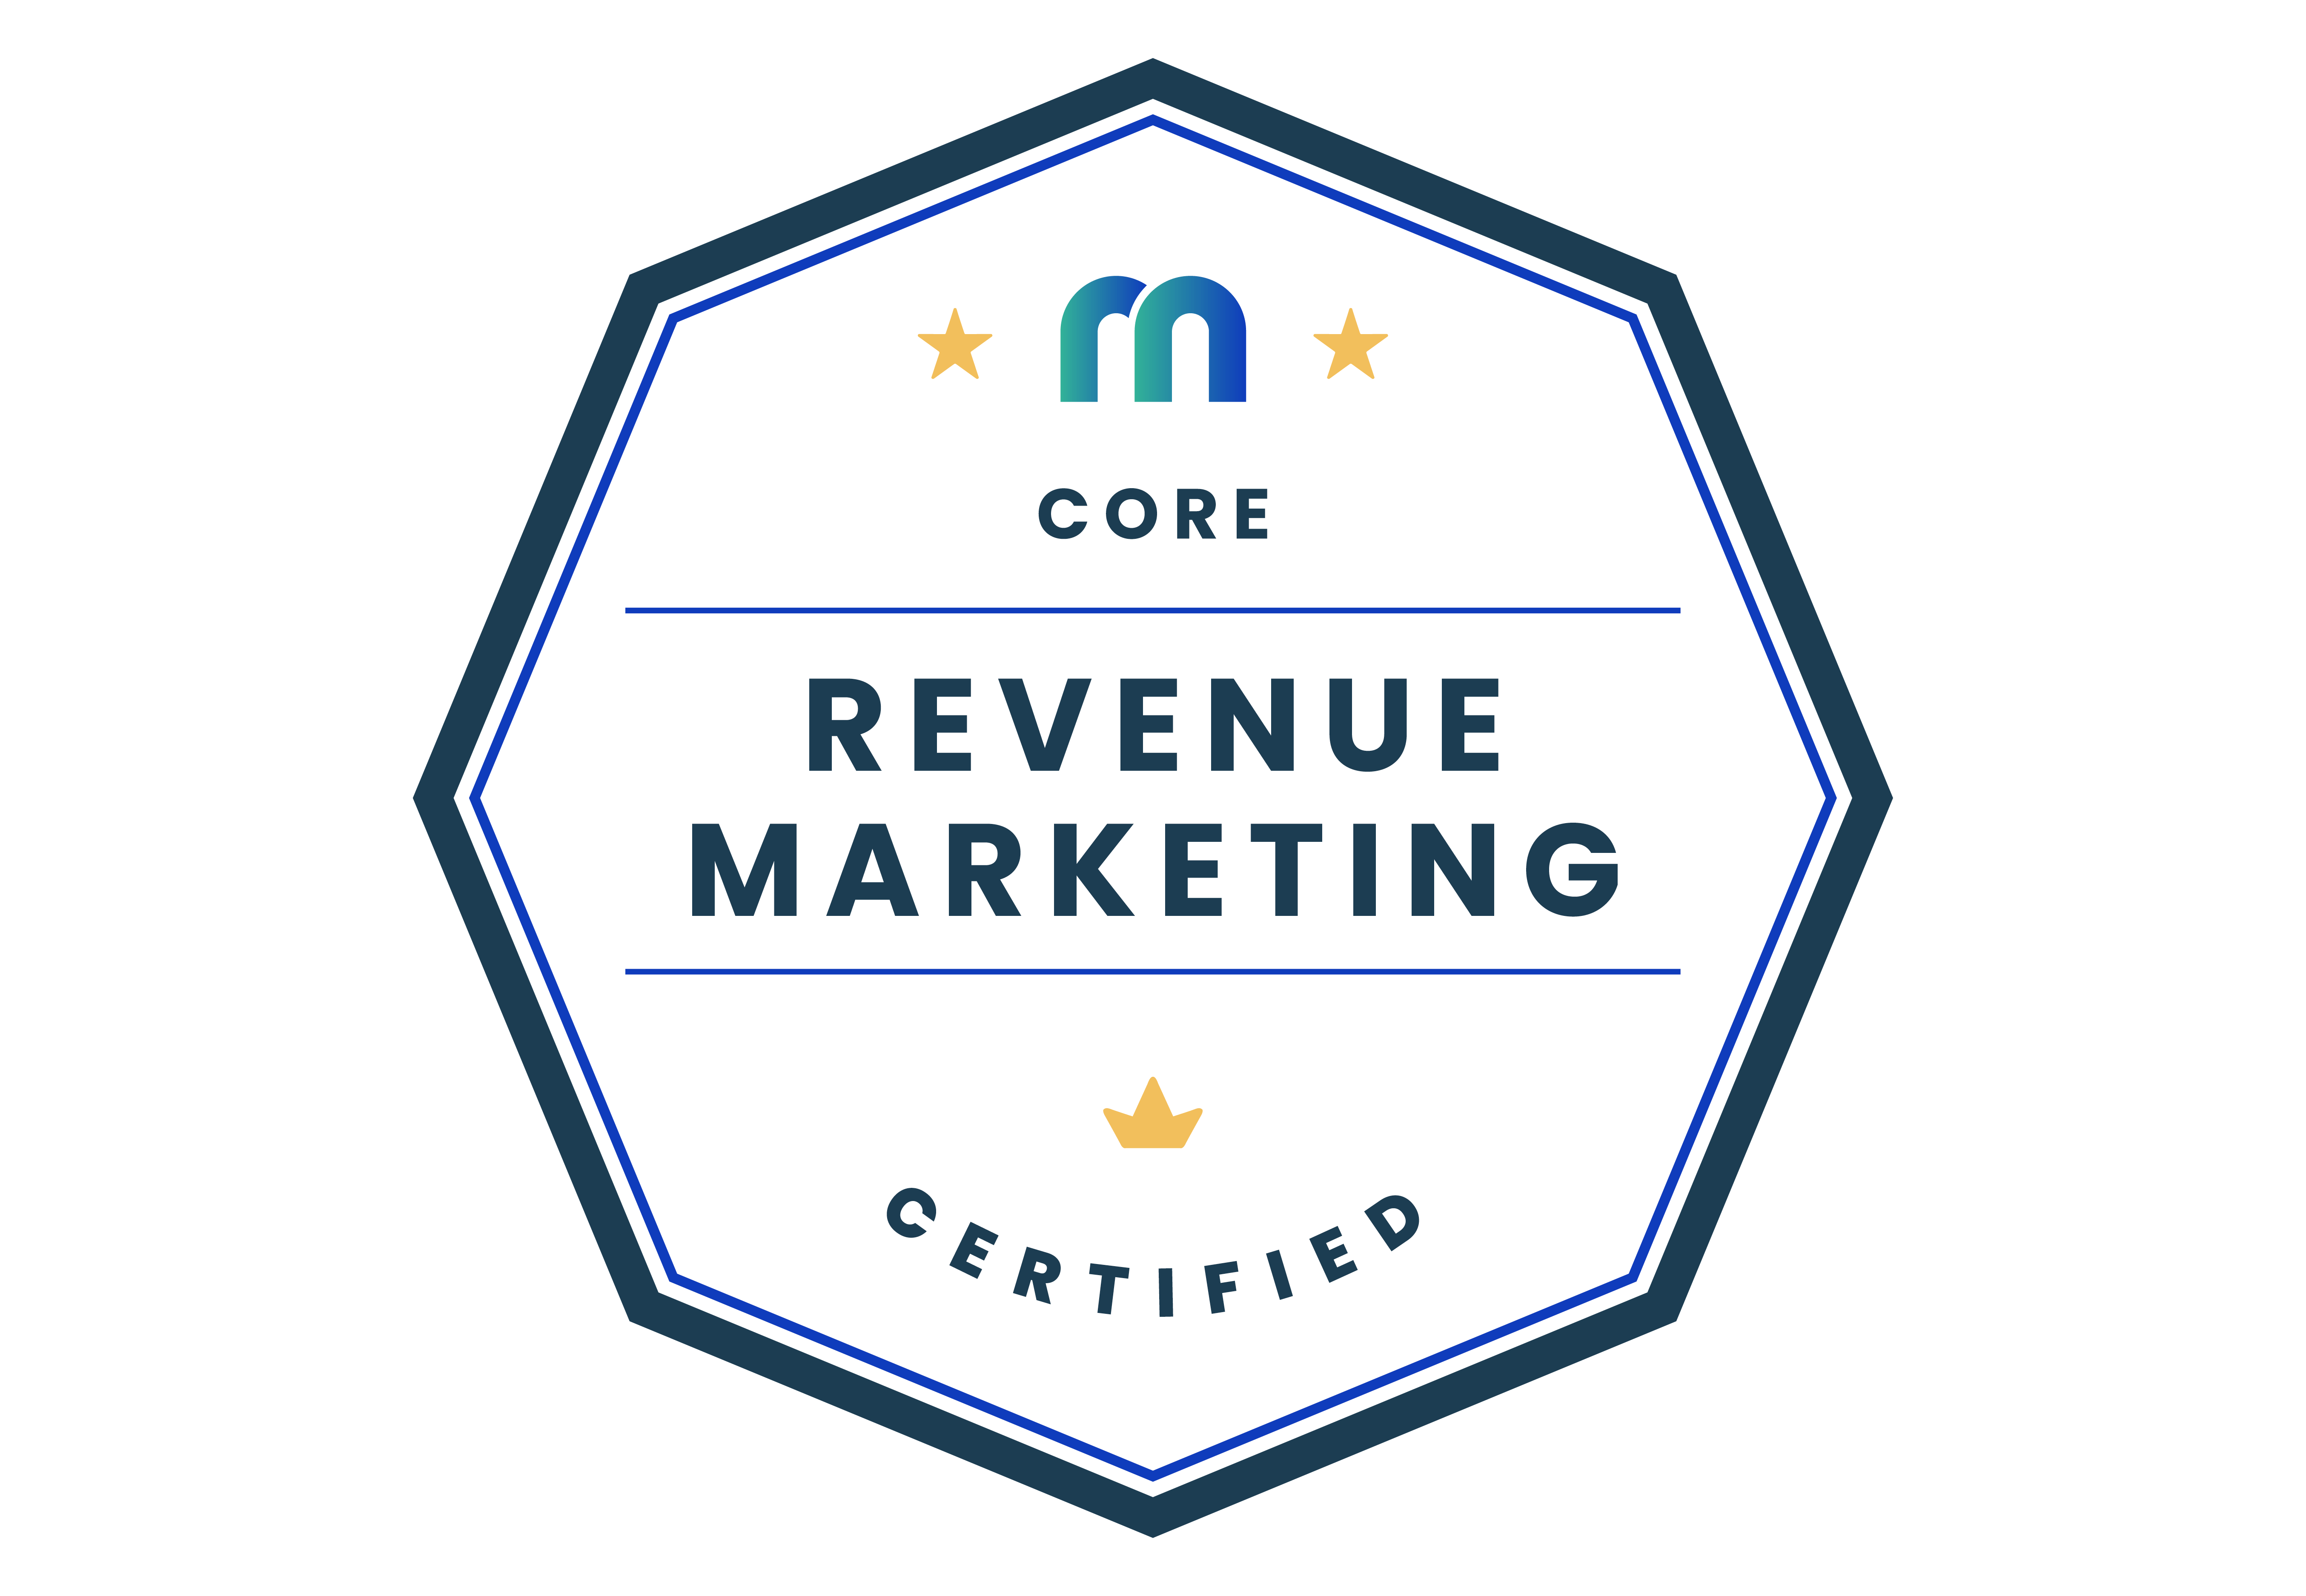 Revenue Marketing Certified: Core badge